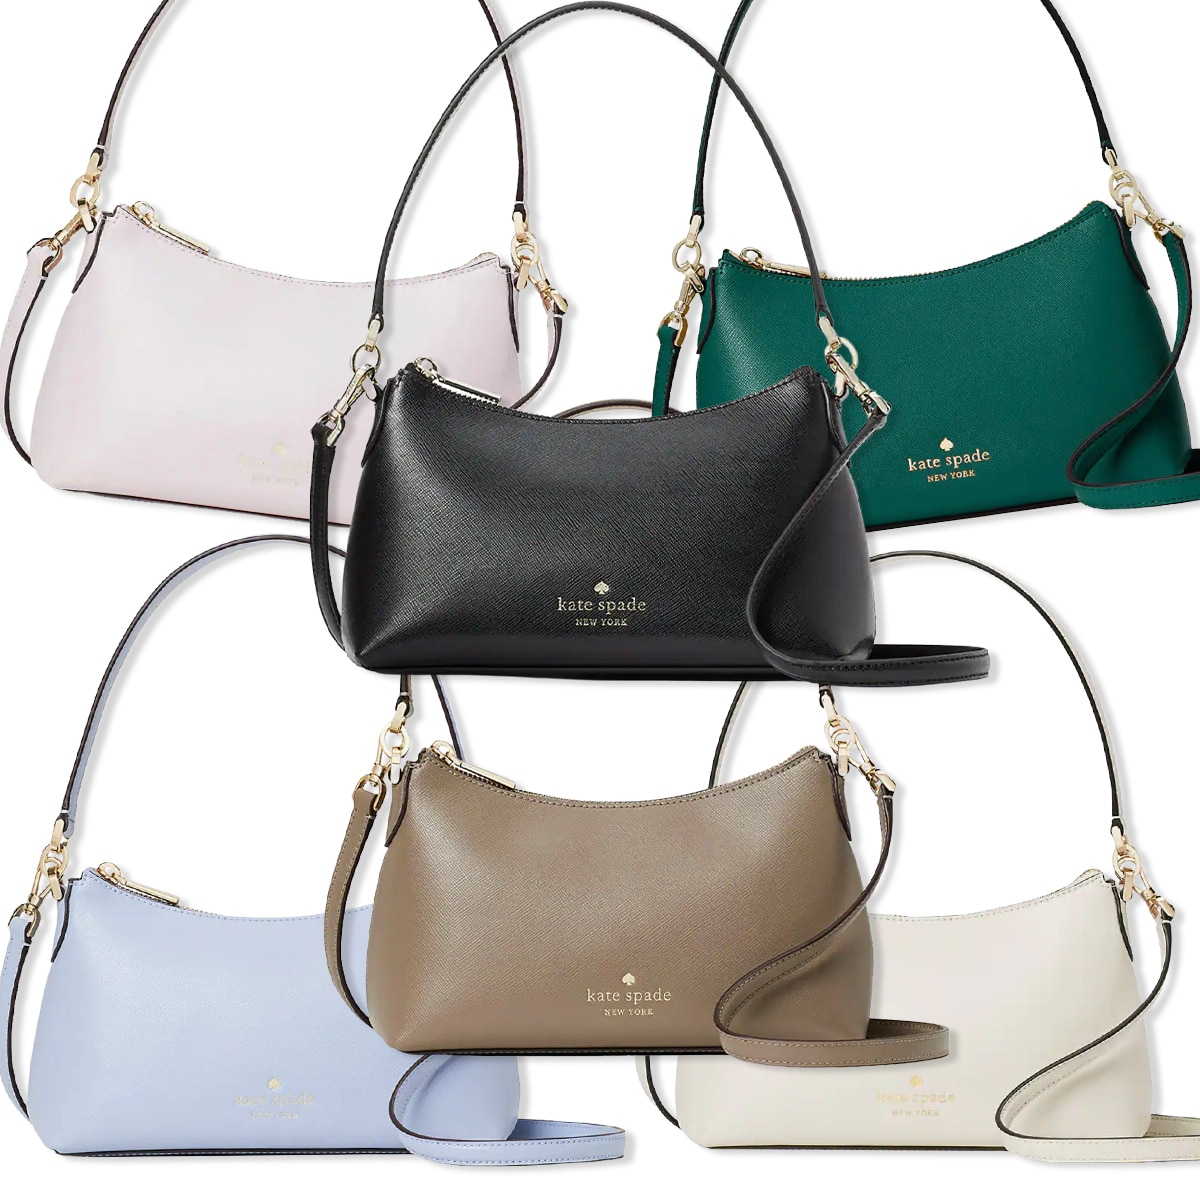 Kate Spade purse | Bags, Purses, Purses and handbags